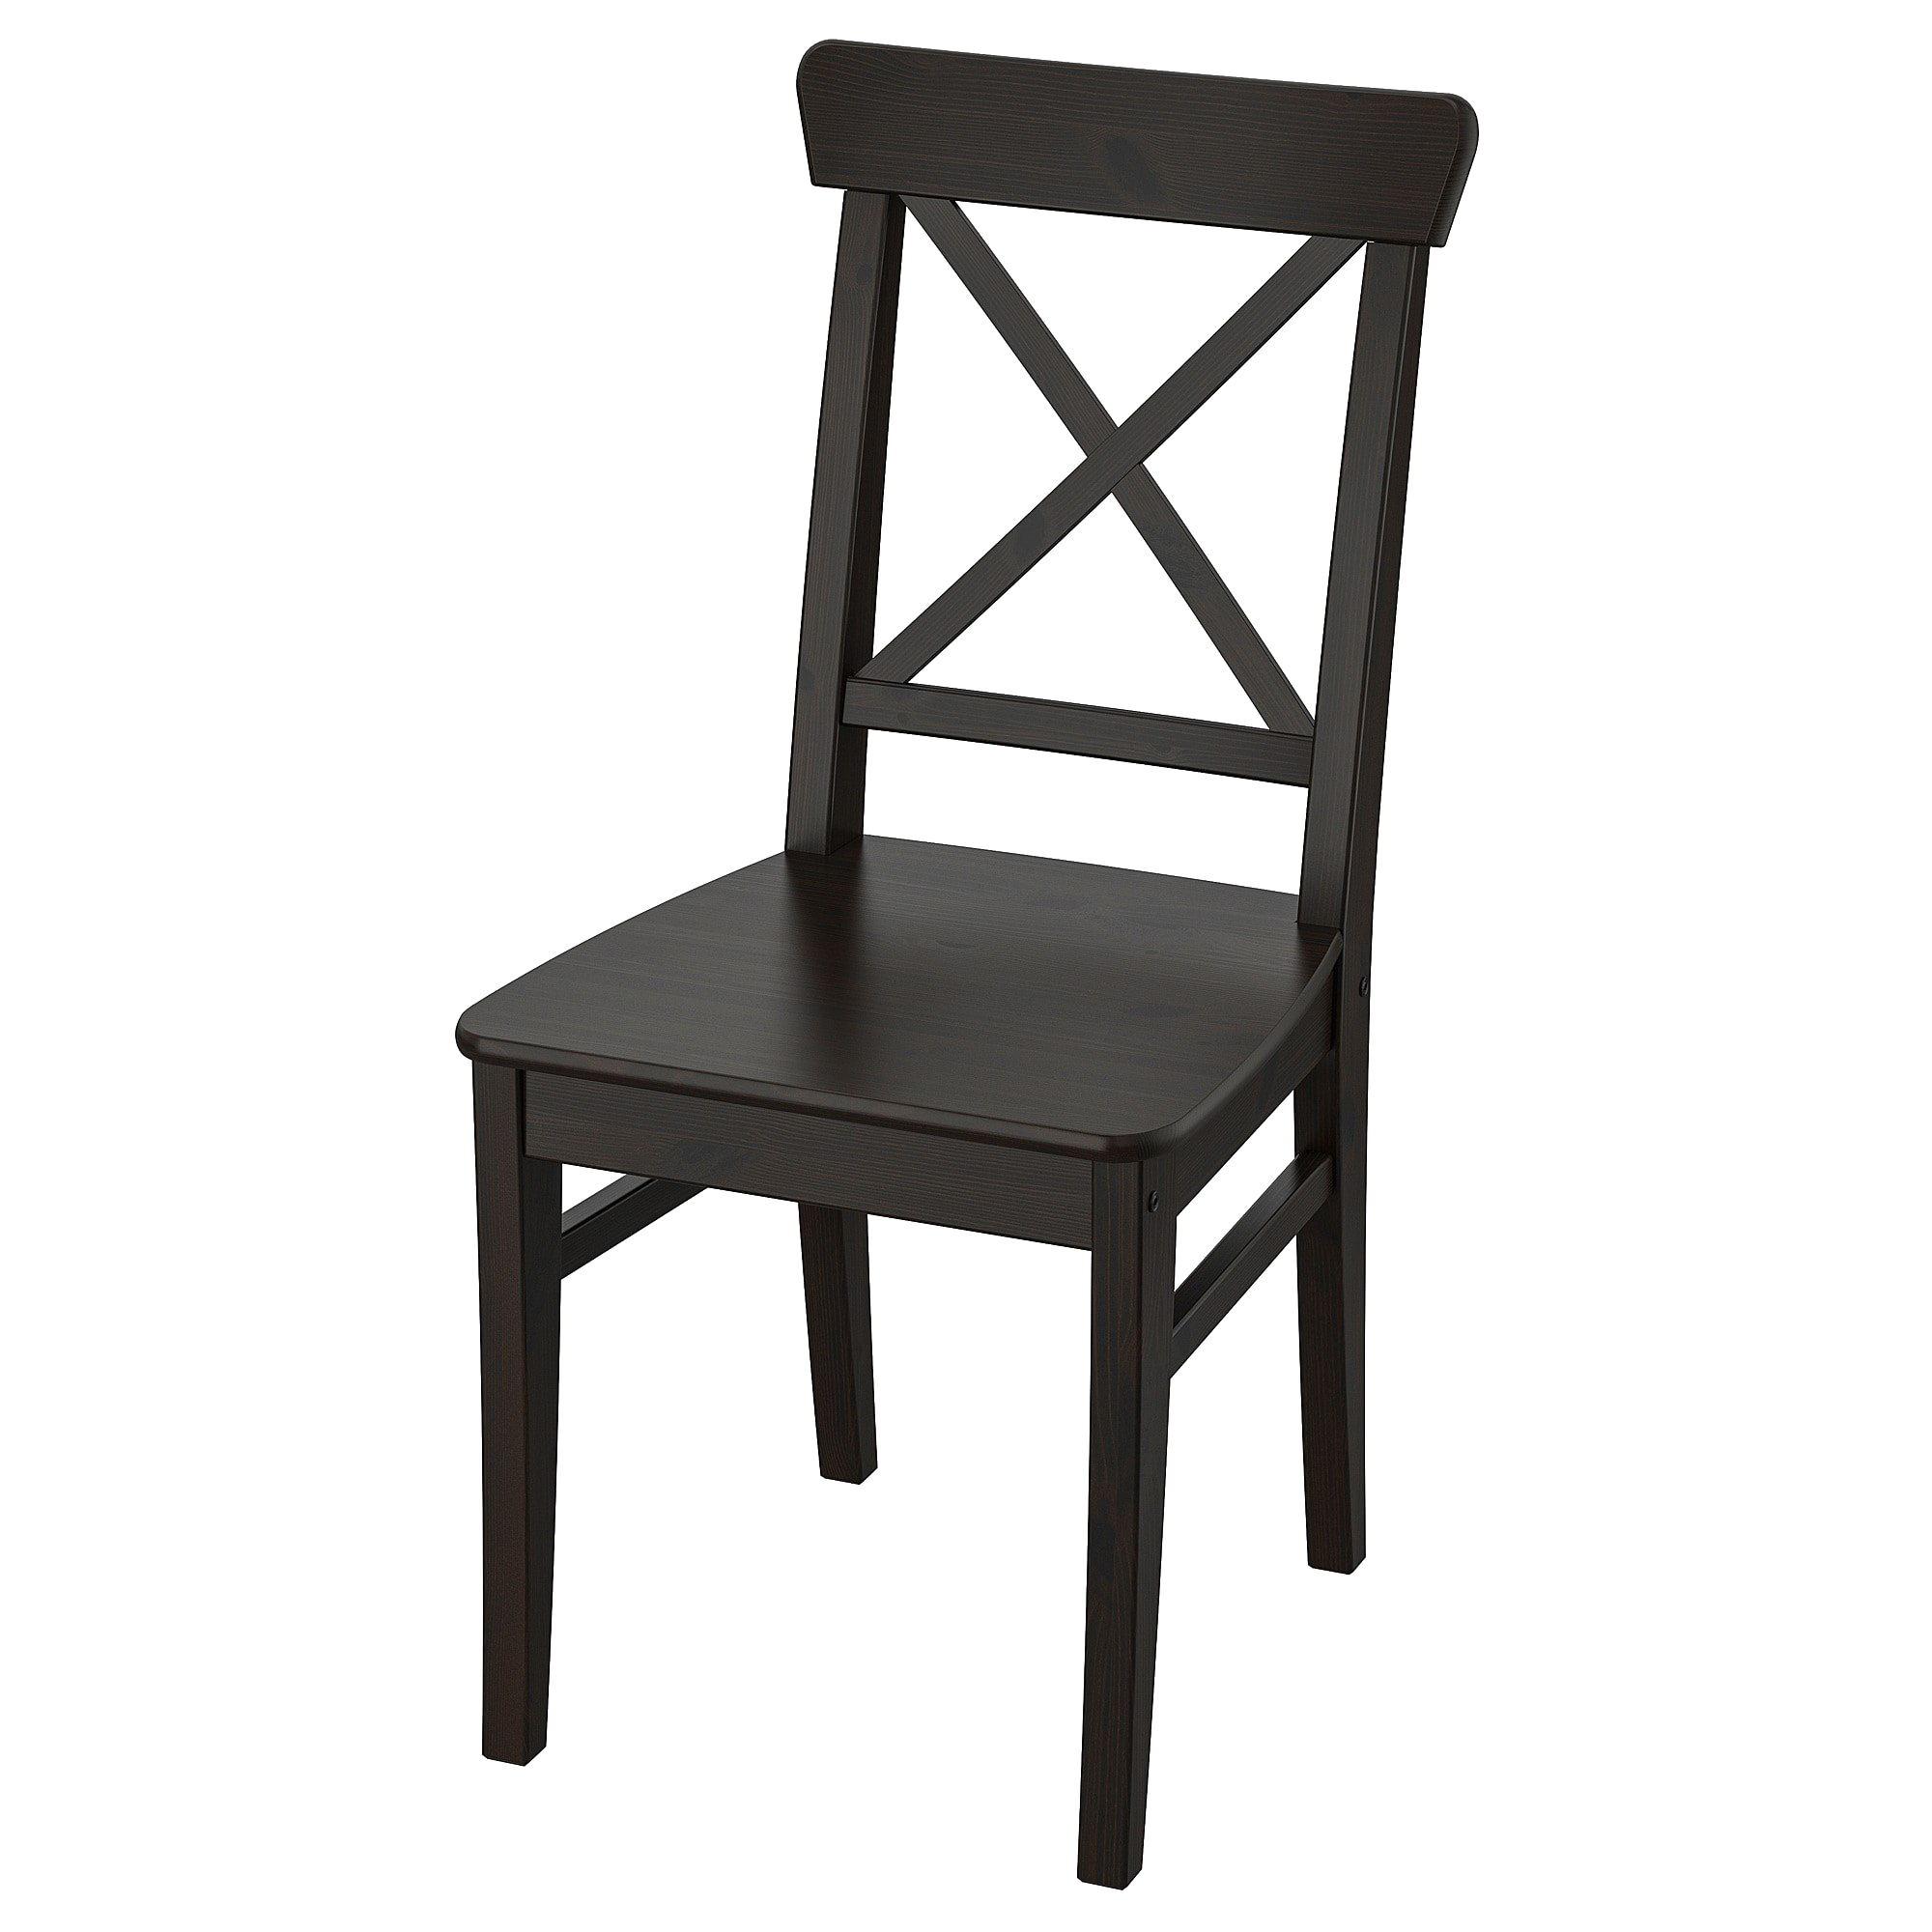 Wooden เก้าอี้ภาพโปร่งใสs